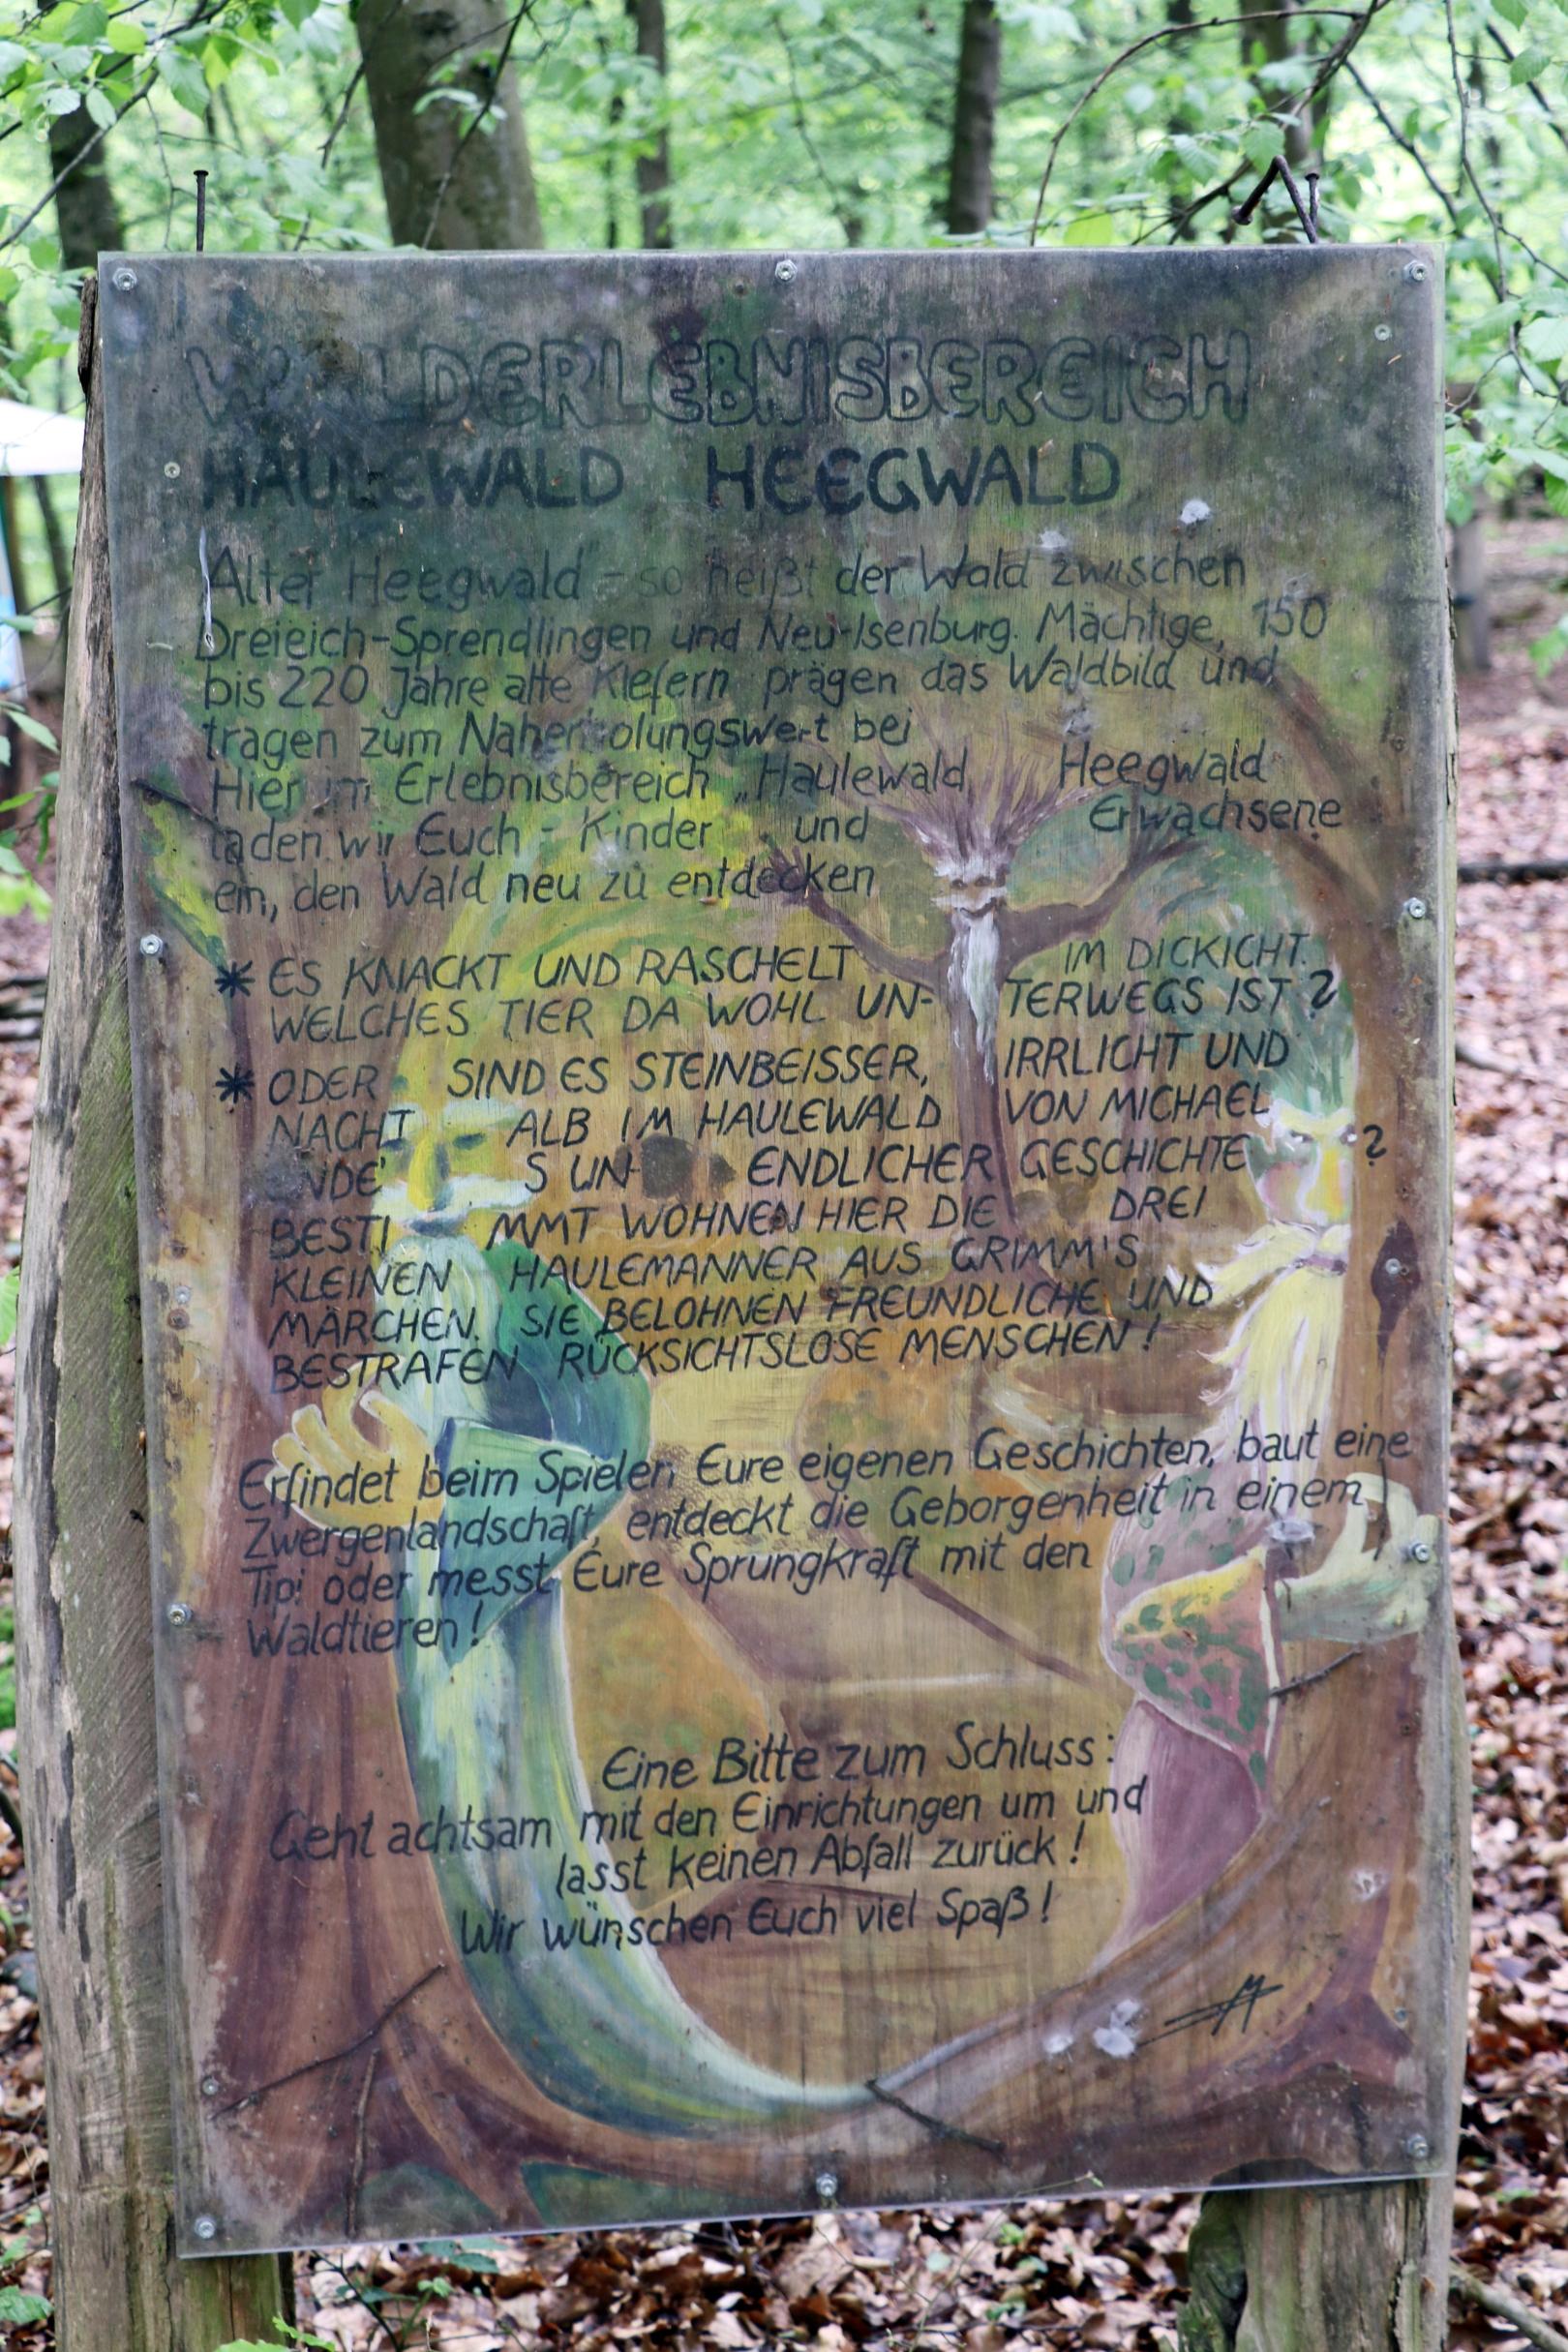 Haulewald / heegwald (c) D. Thiel